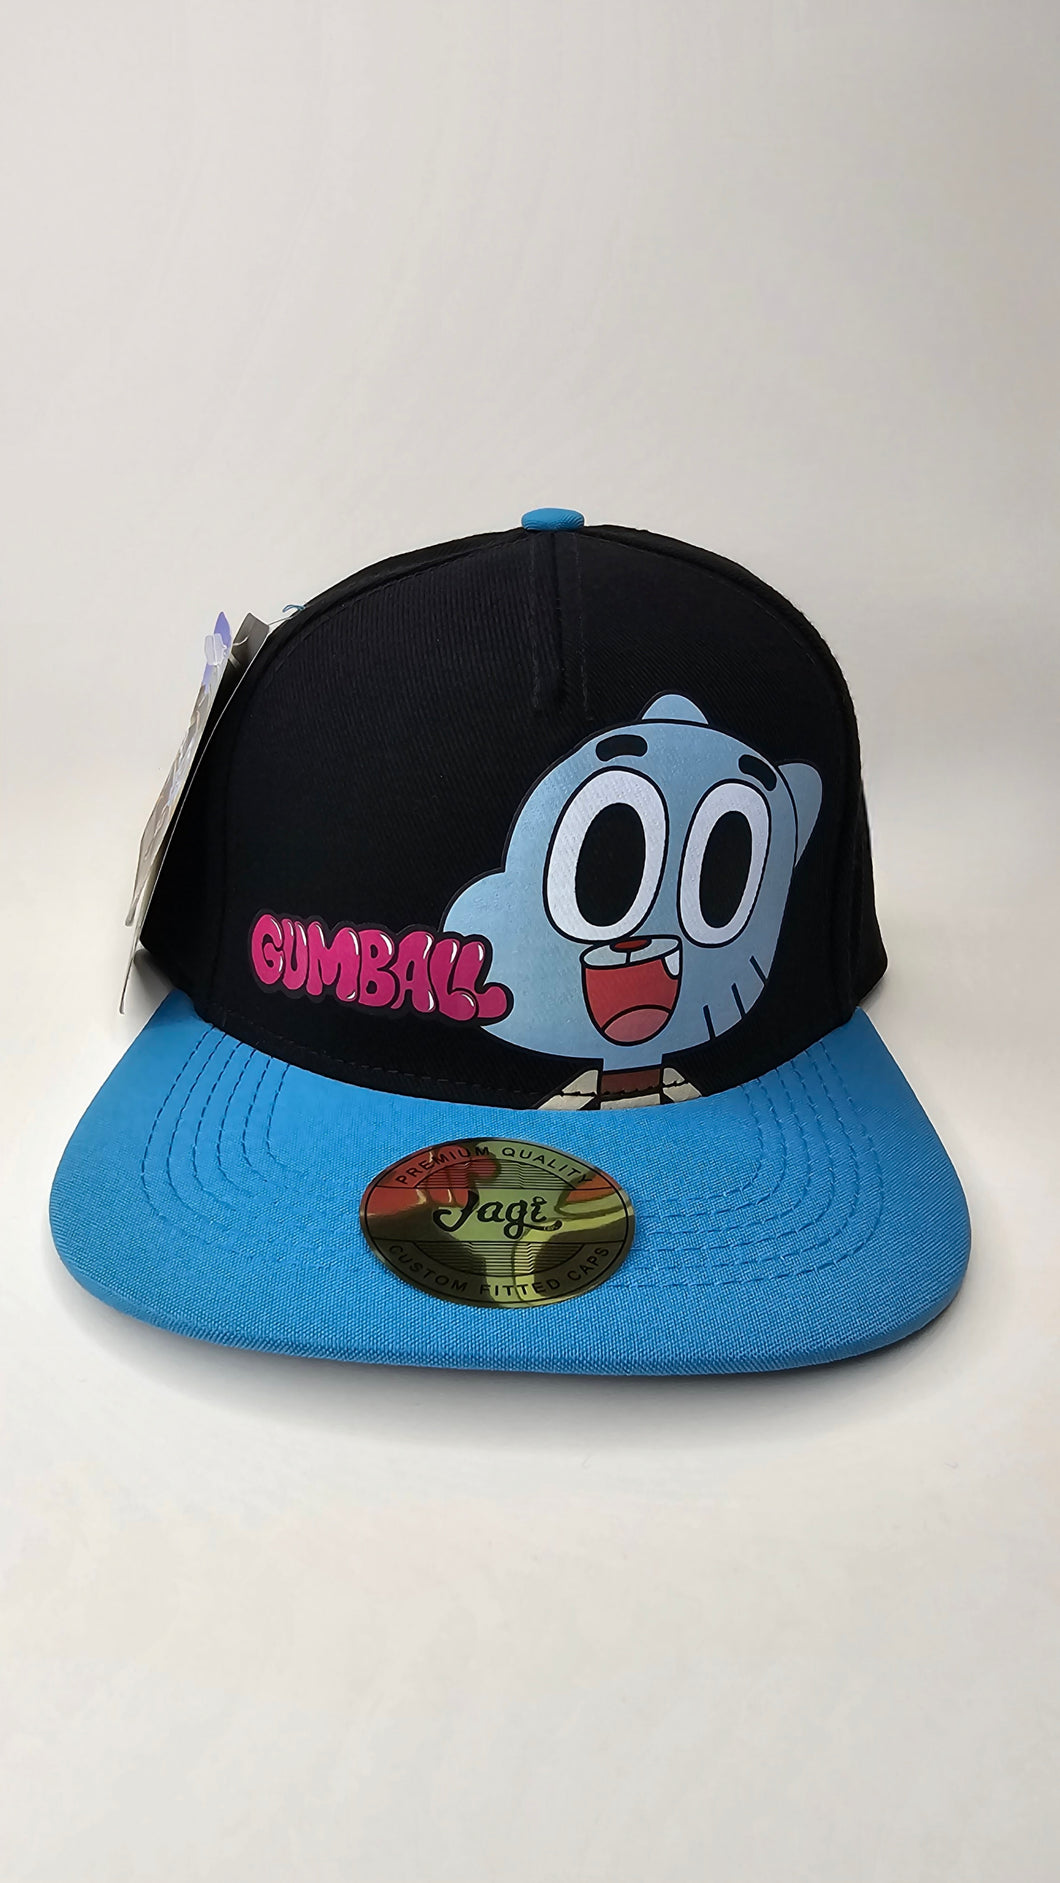 Gorra de Gumball